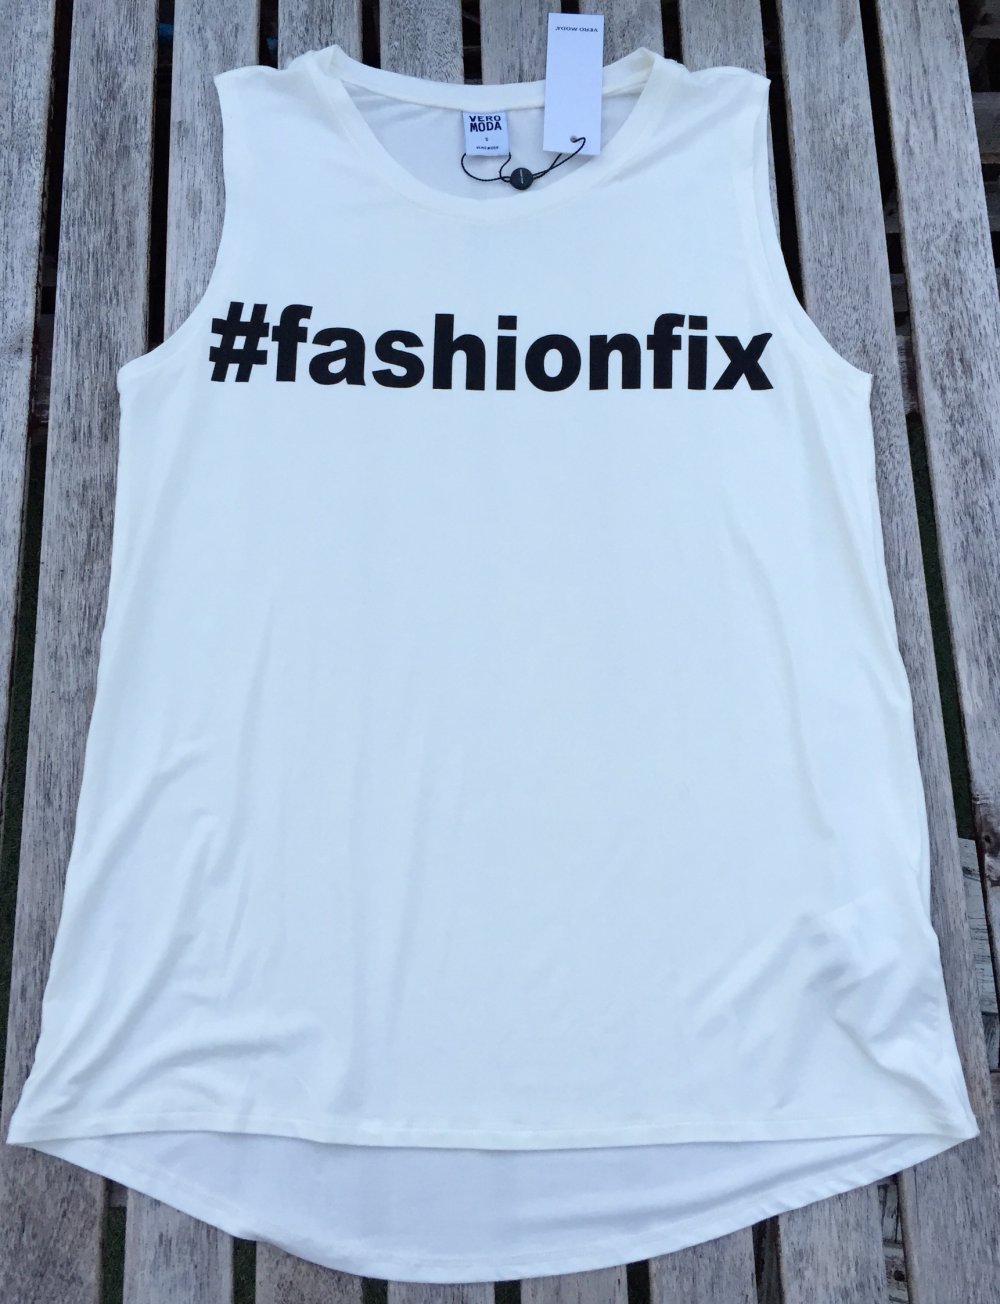 VERO MODA Tanktop Shirt Longtop #fashionfix